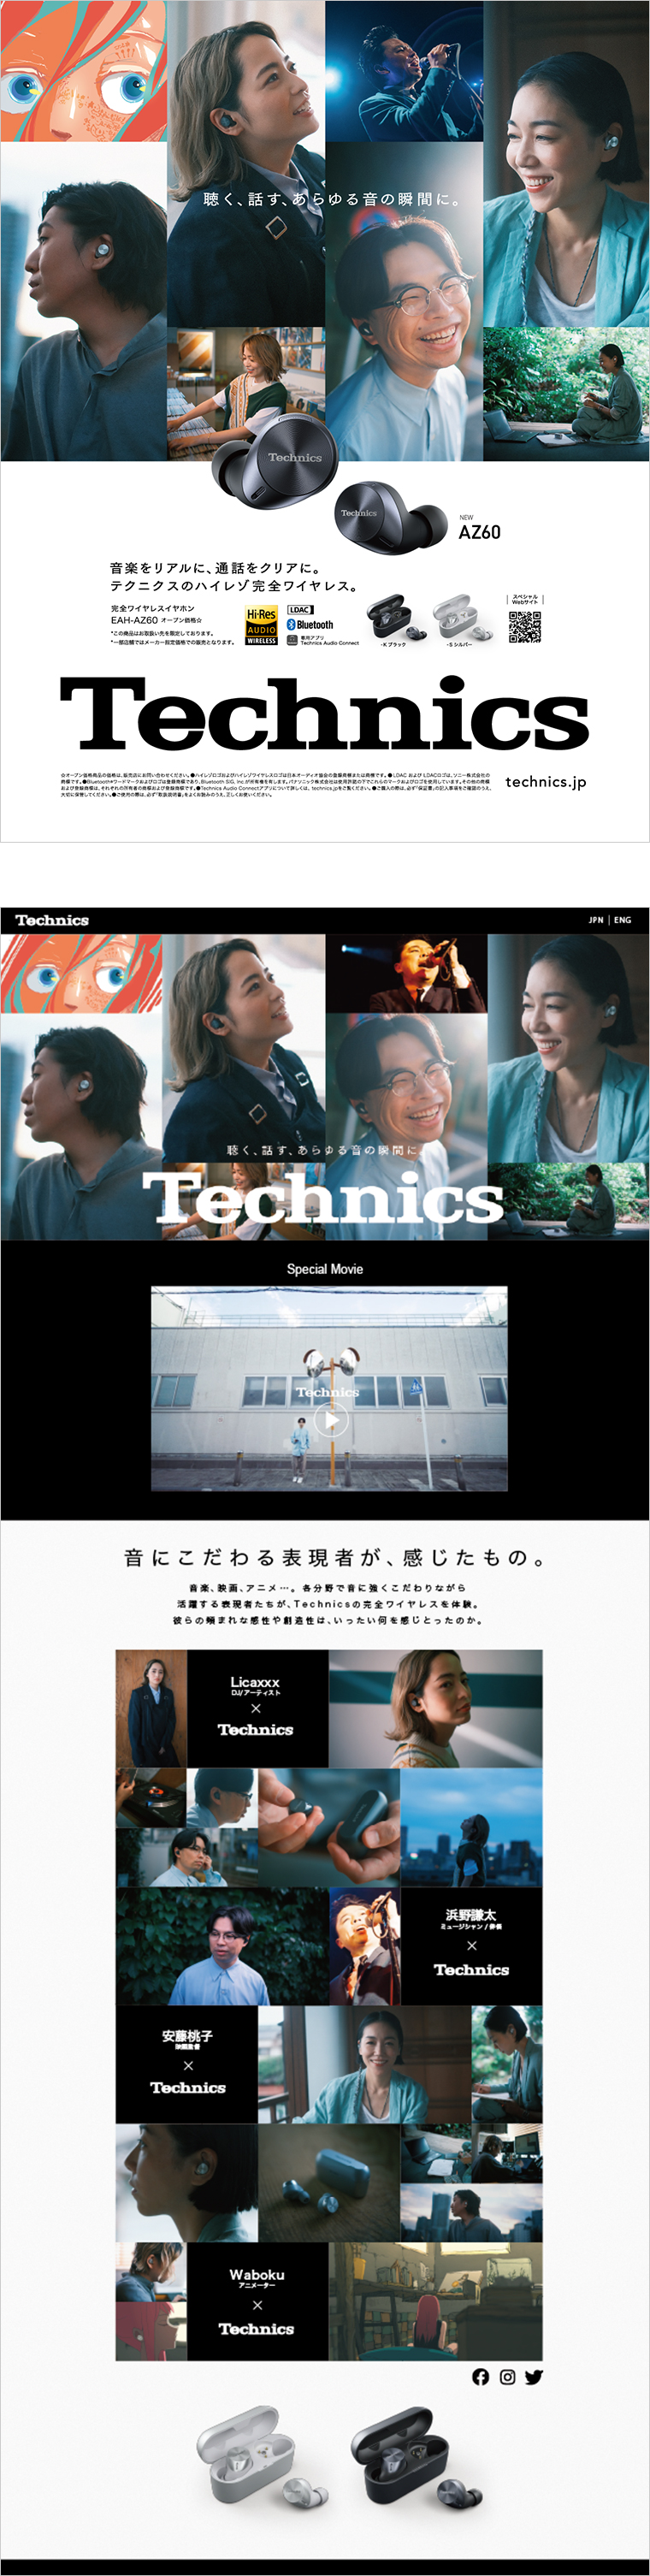 Technics 完全ワイヤレスイヤホン AZ60　雑誌広告/WEB